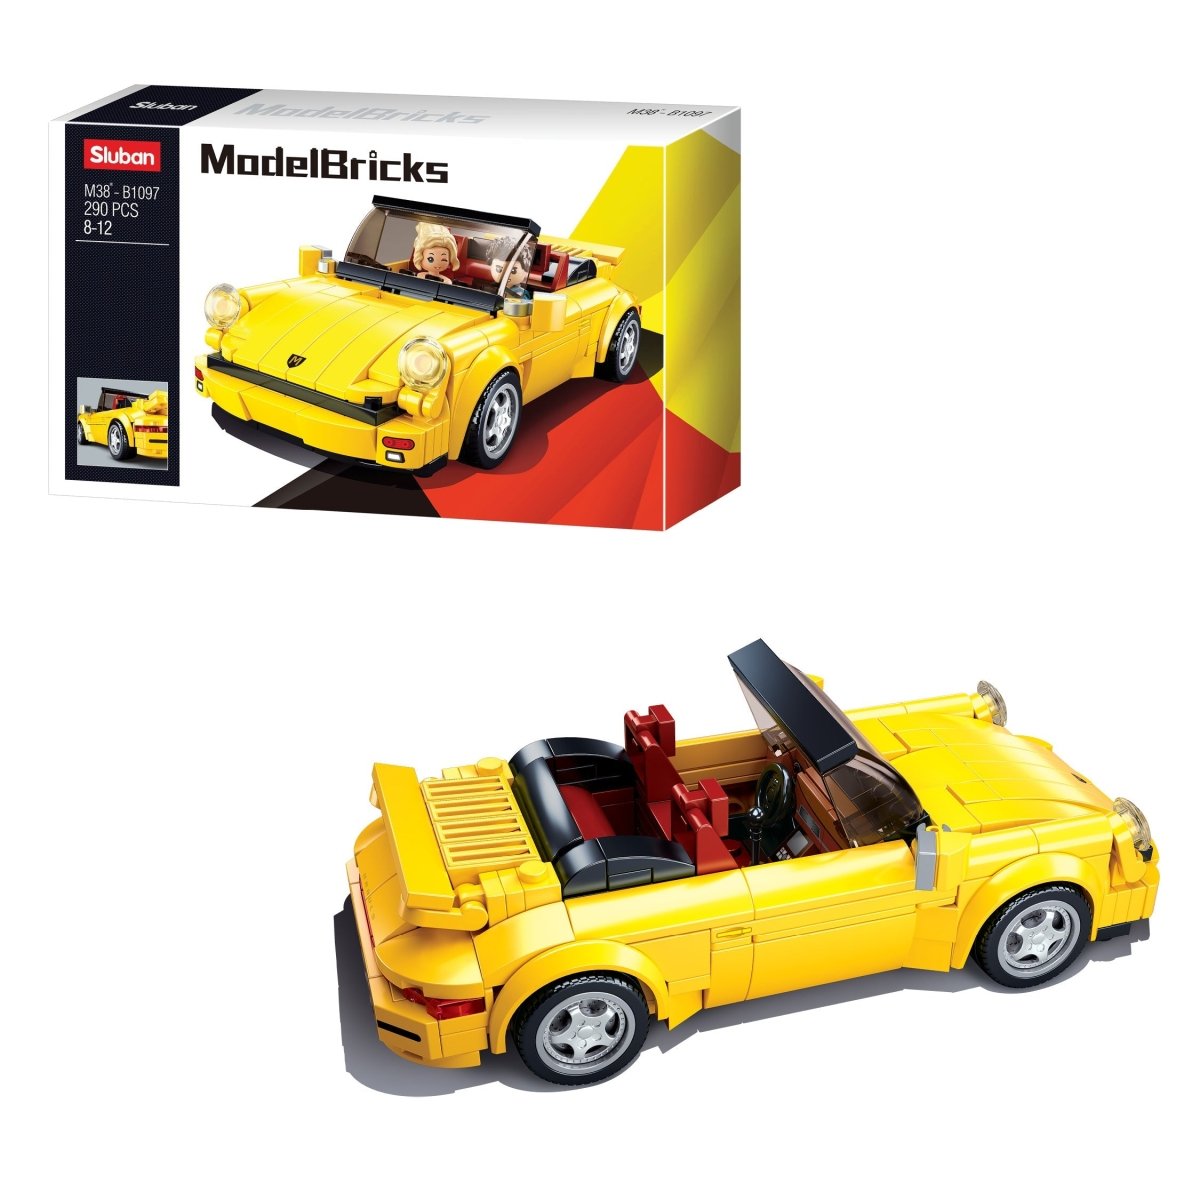 Sluban Modelbricks- 930 Sport Car Building Blocks Kit - M38-B1097